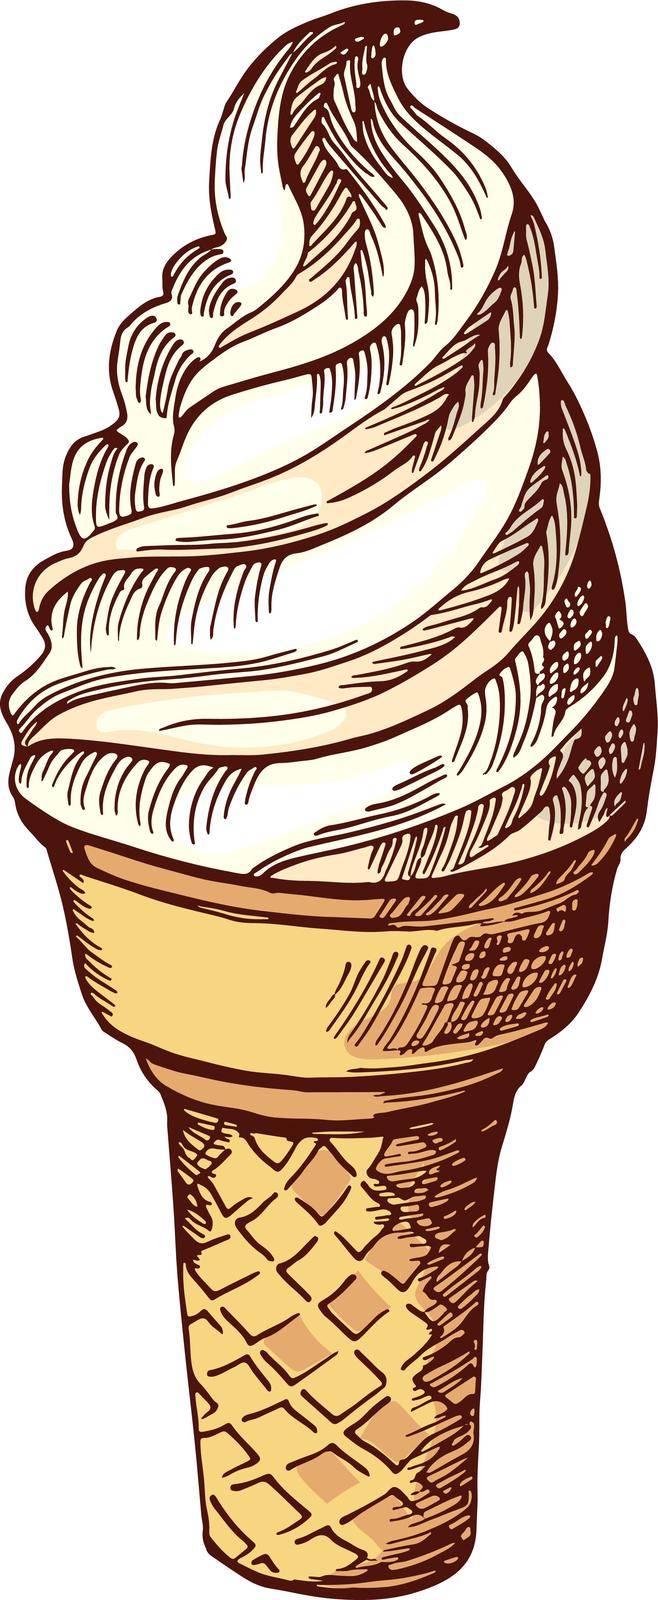 Ice cream waffle cone. Soft frozen dessert icon isolated on white background